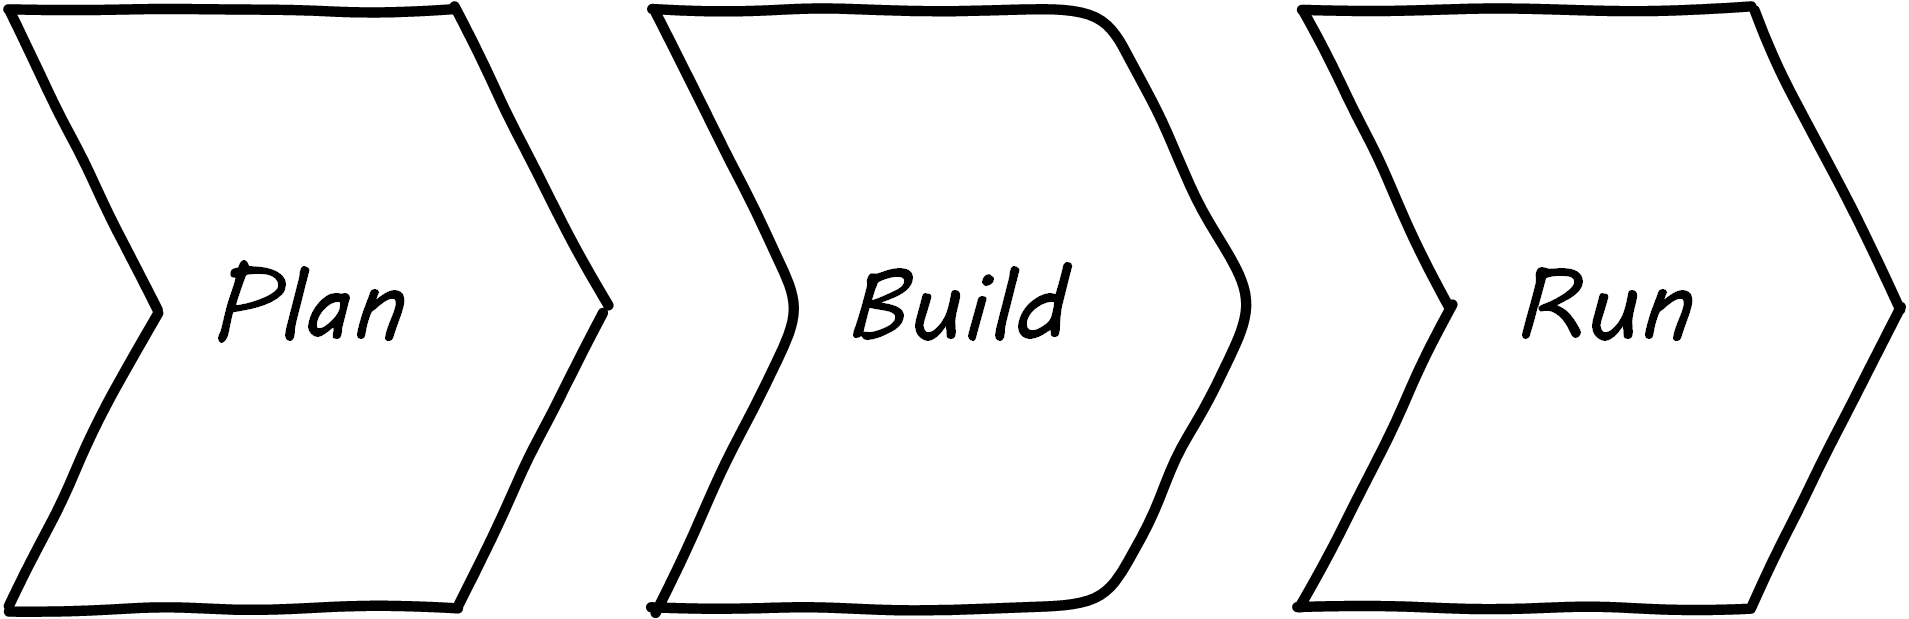 plan/build/run lifecycle